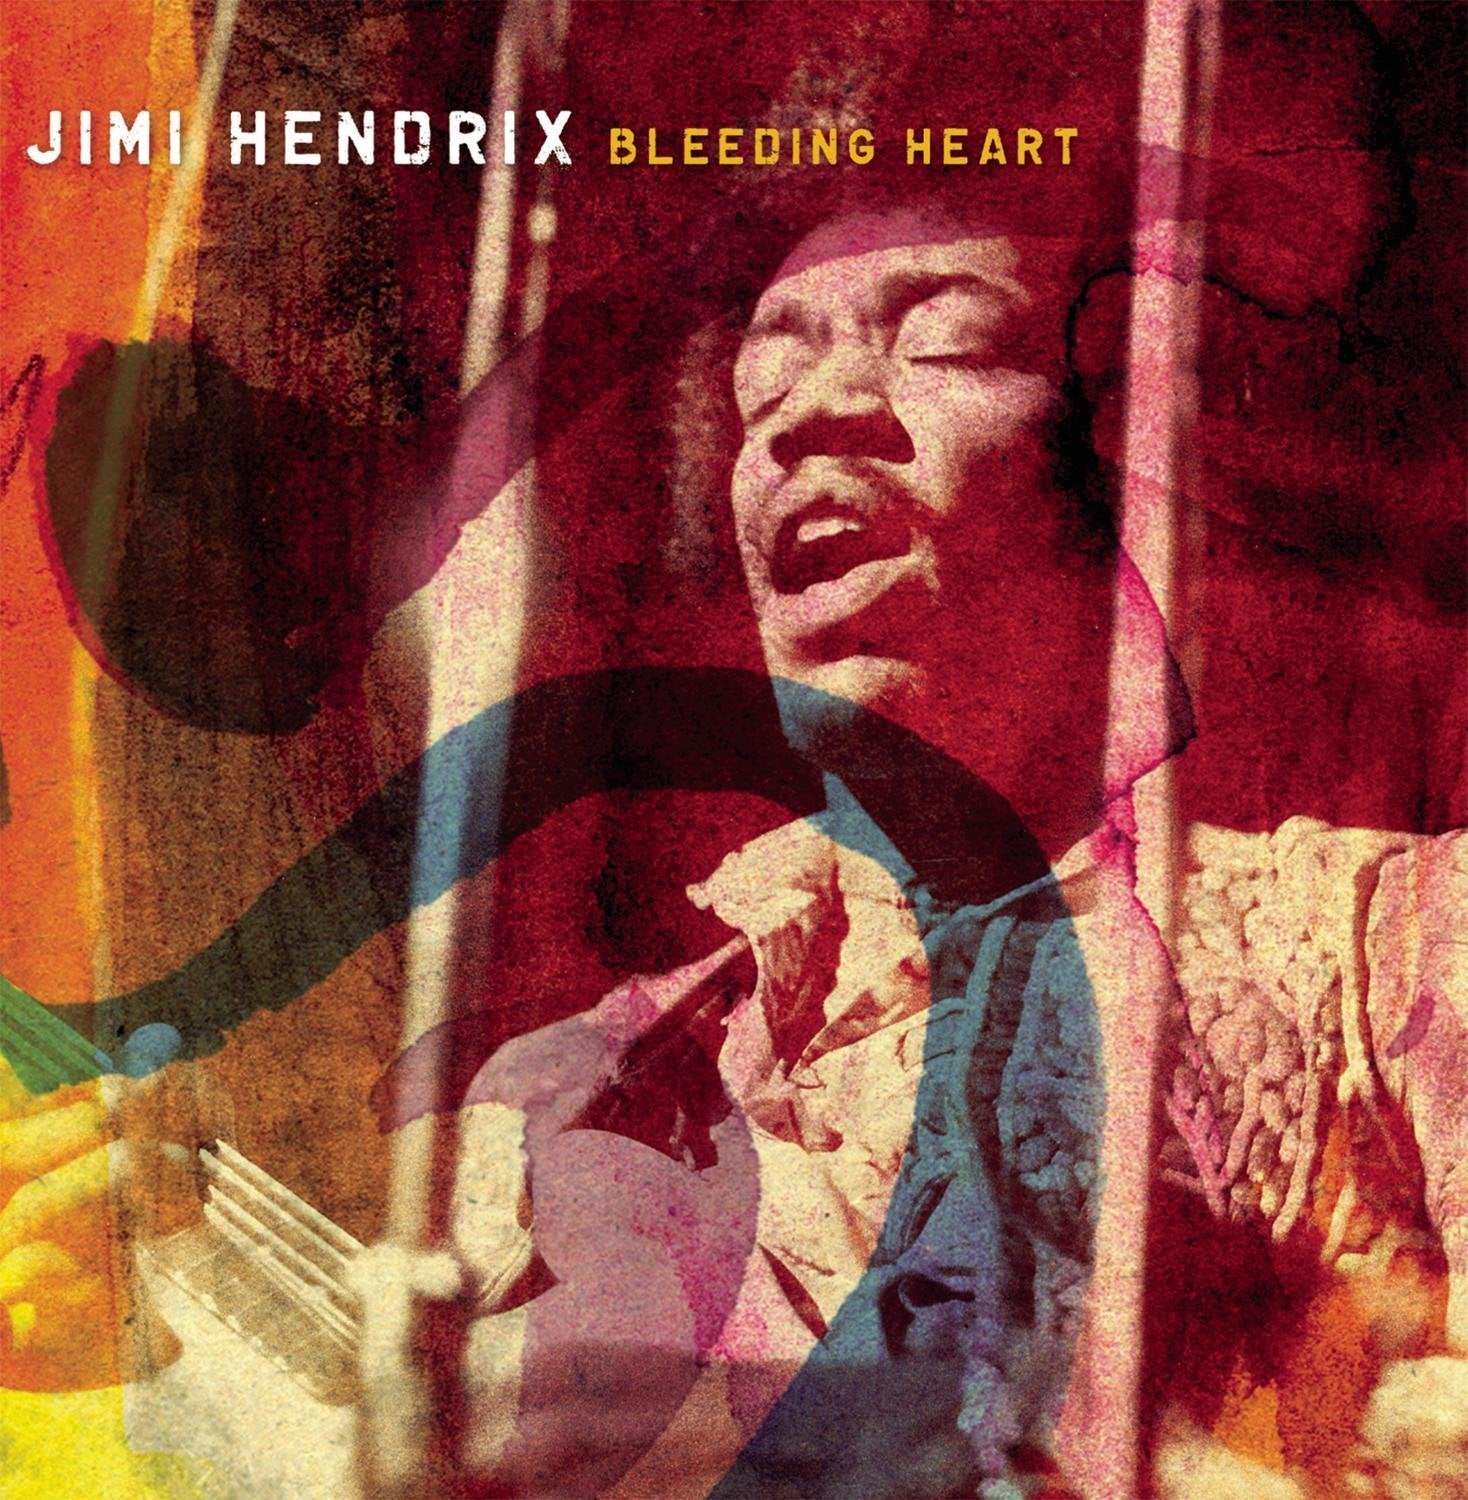 Jimi Hendrix "BLEEDING HEART" B/W Vinyl